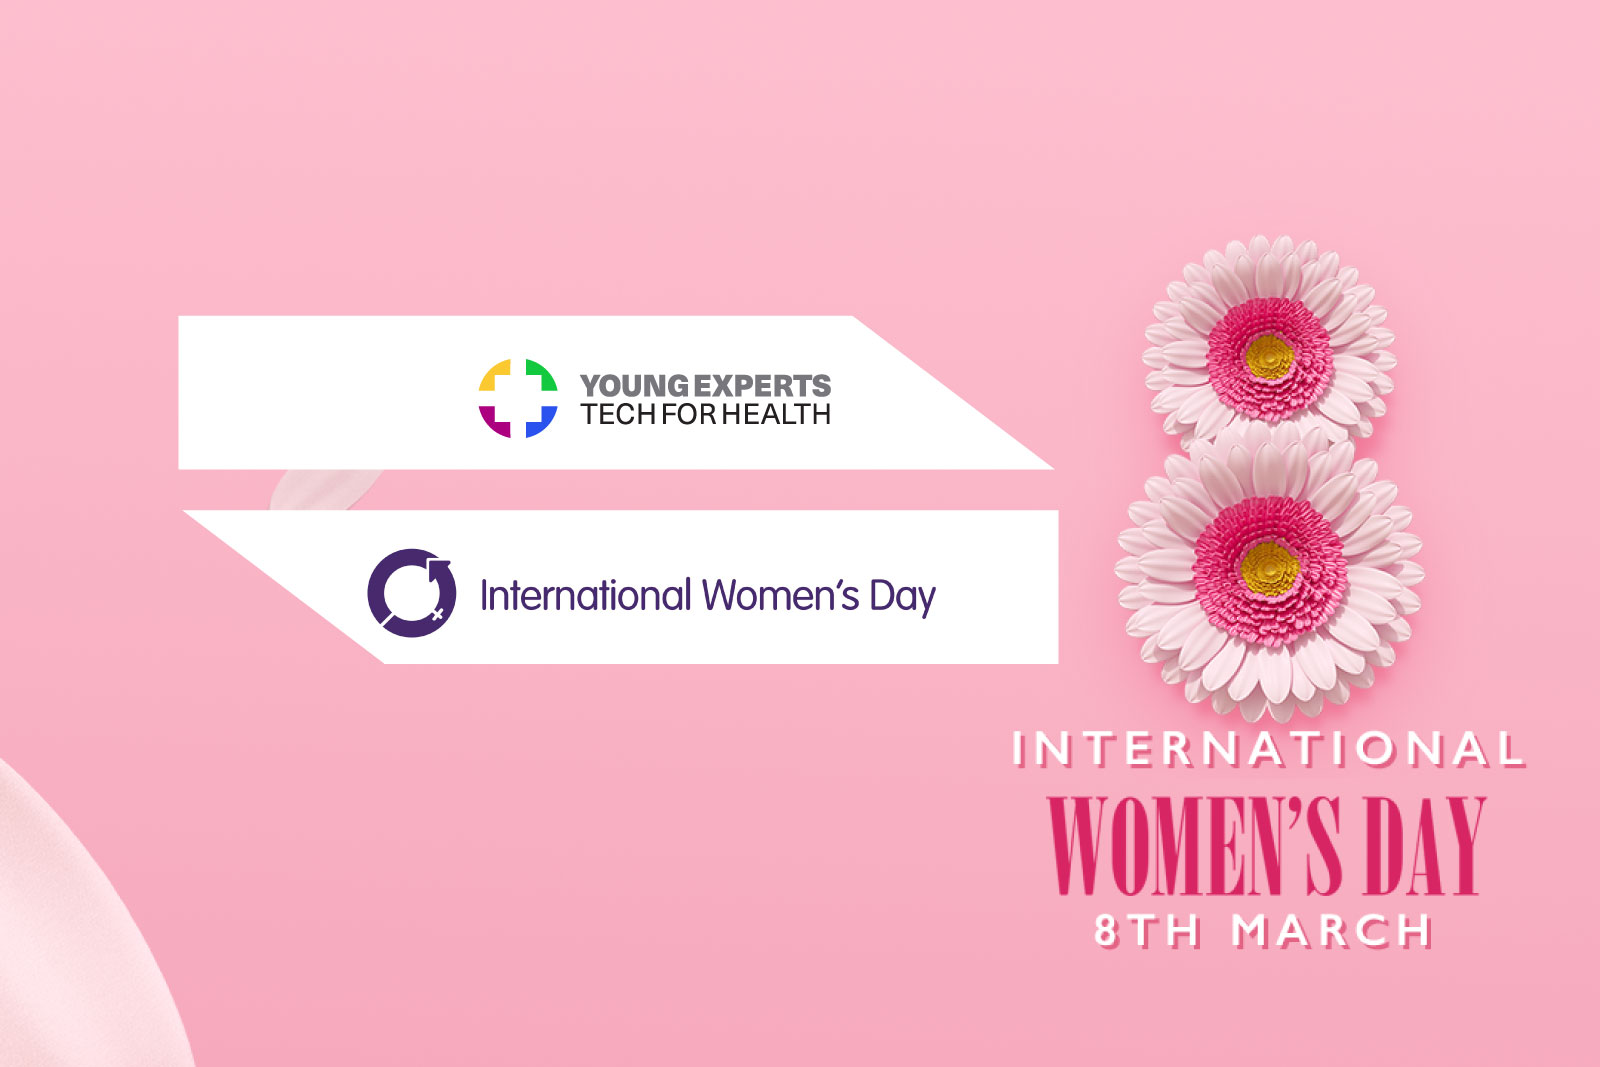 YET4H marks International Women's day